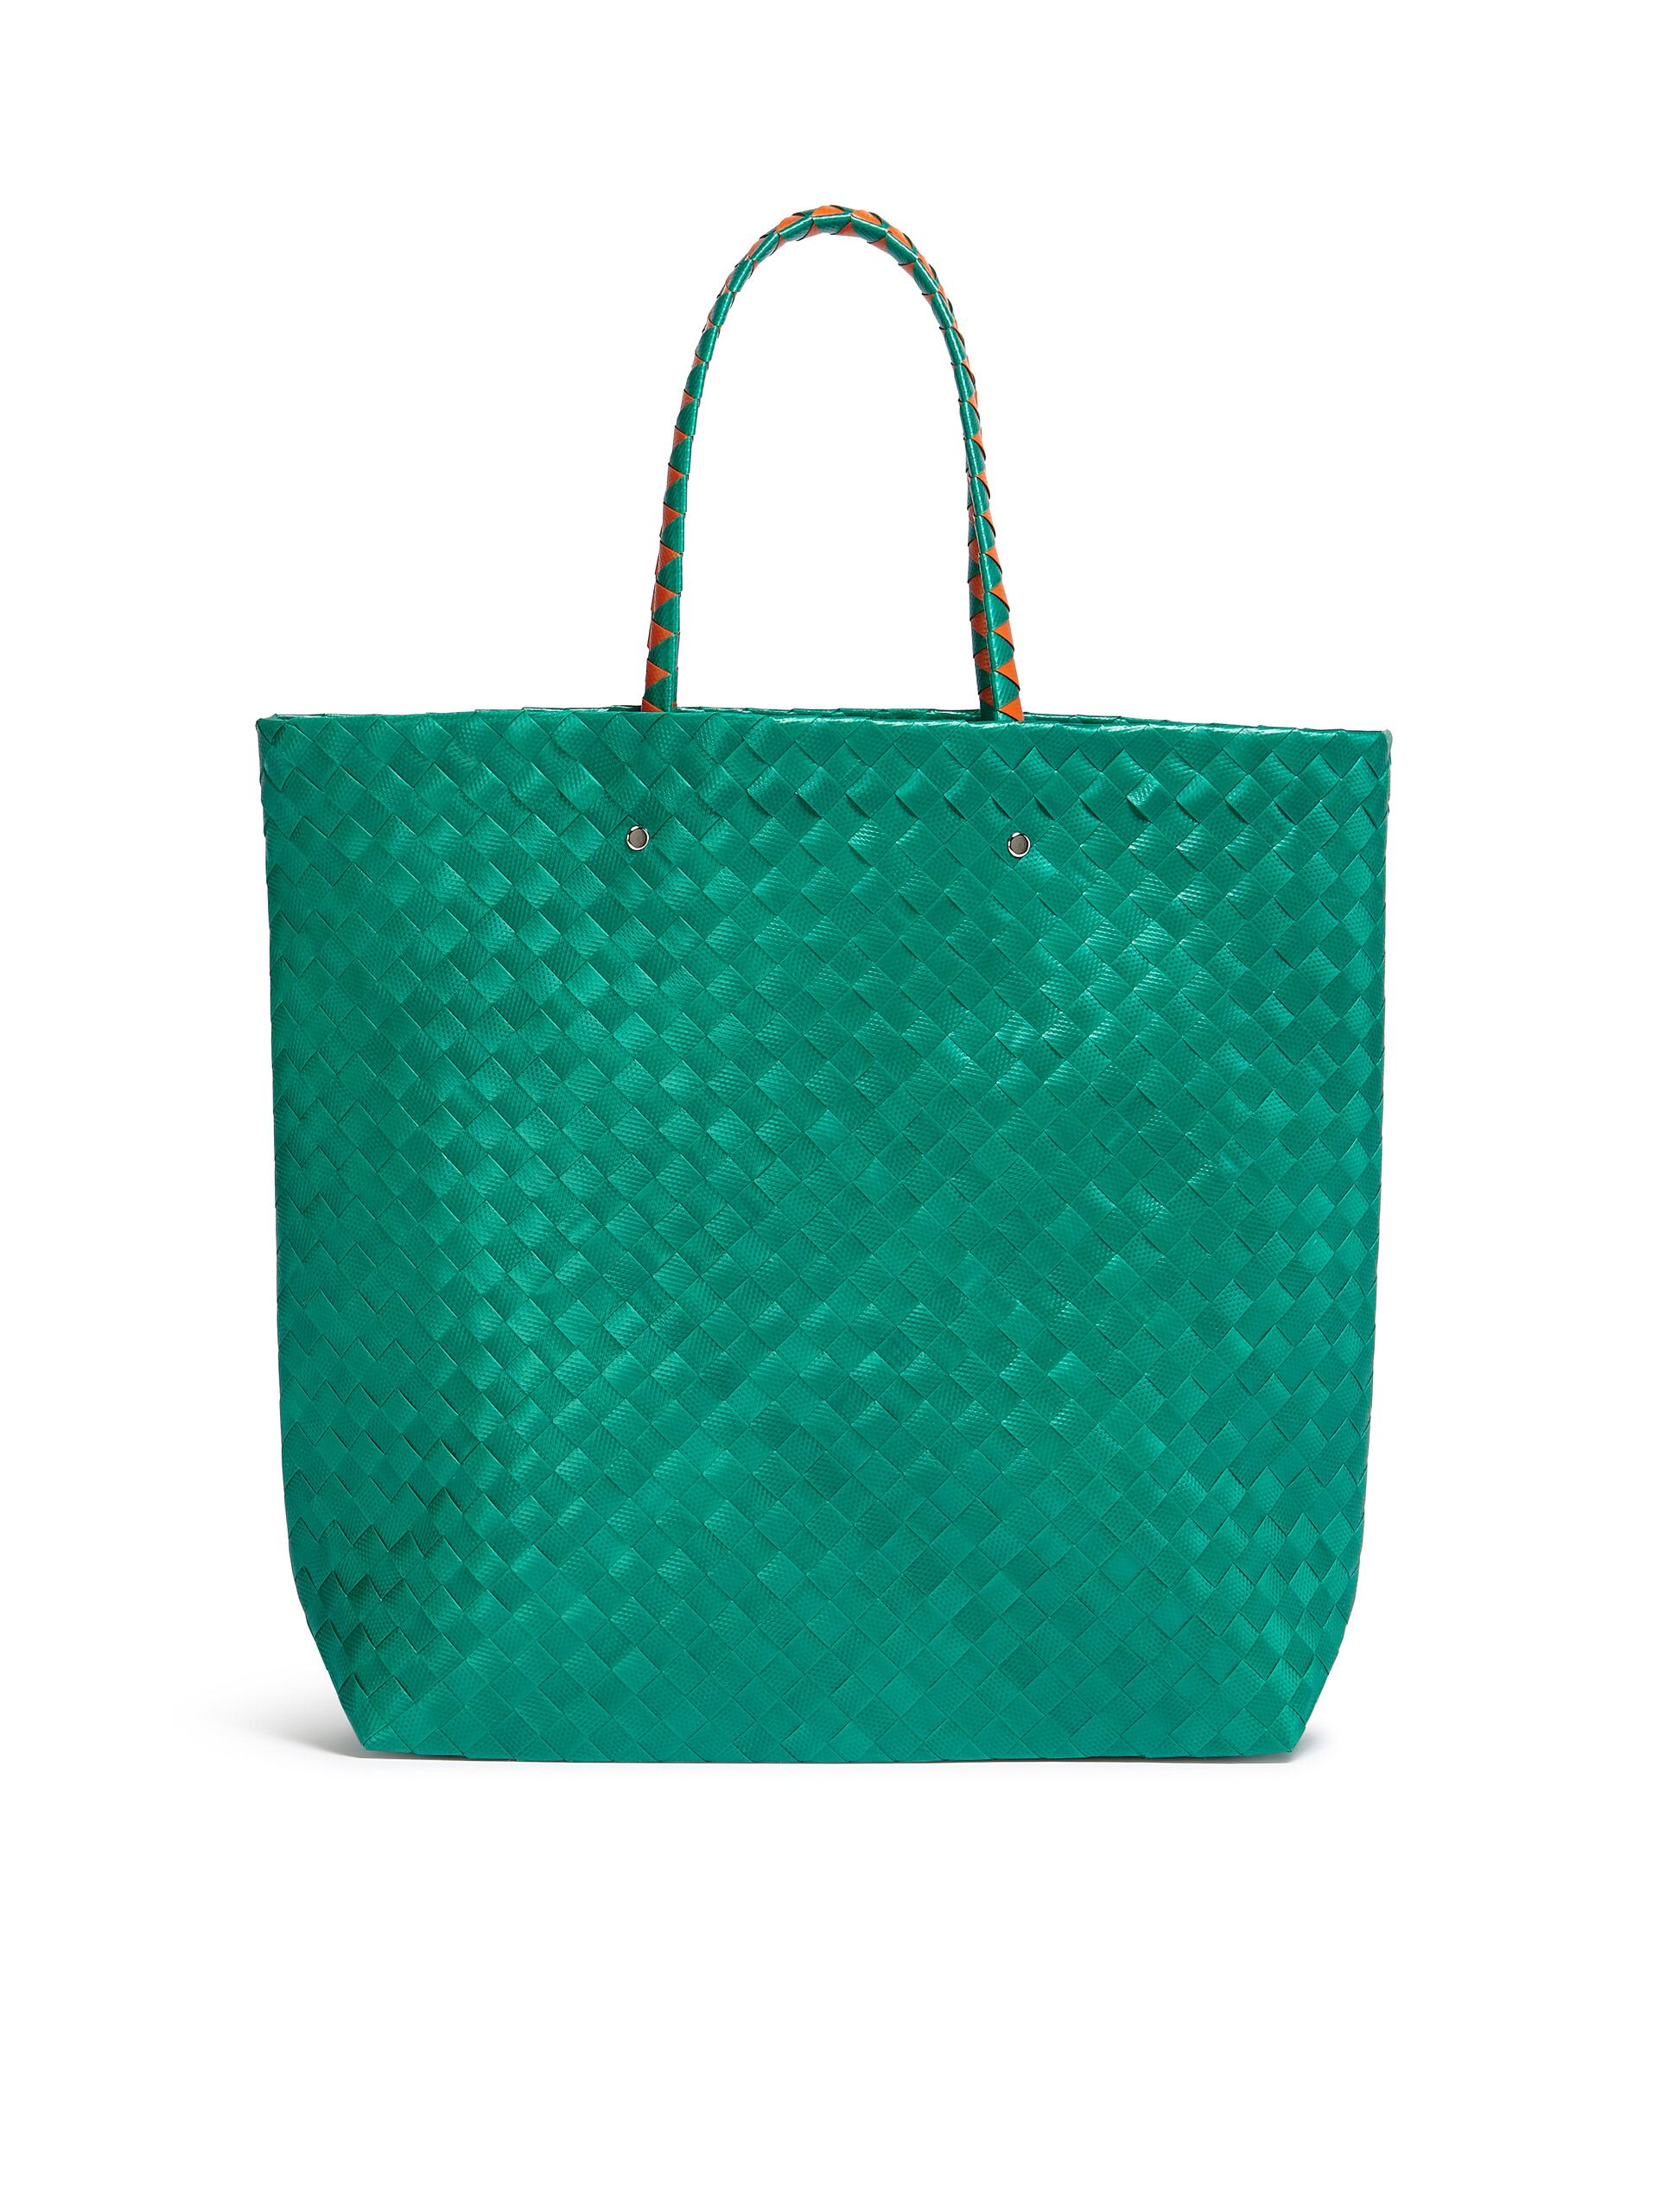 MARNI MARKET BORA medium bag in green flower motif - Bags - Image 3